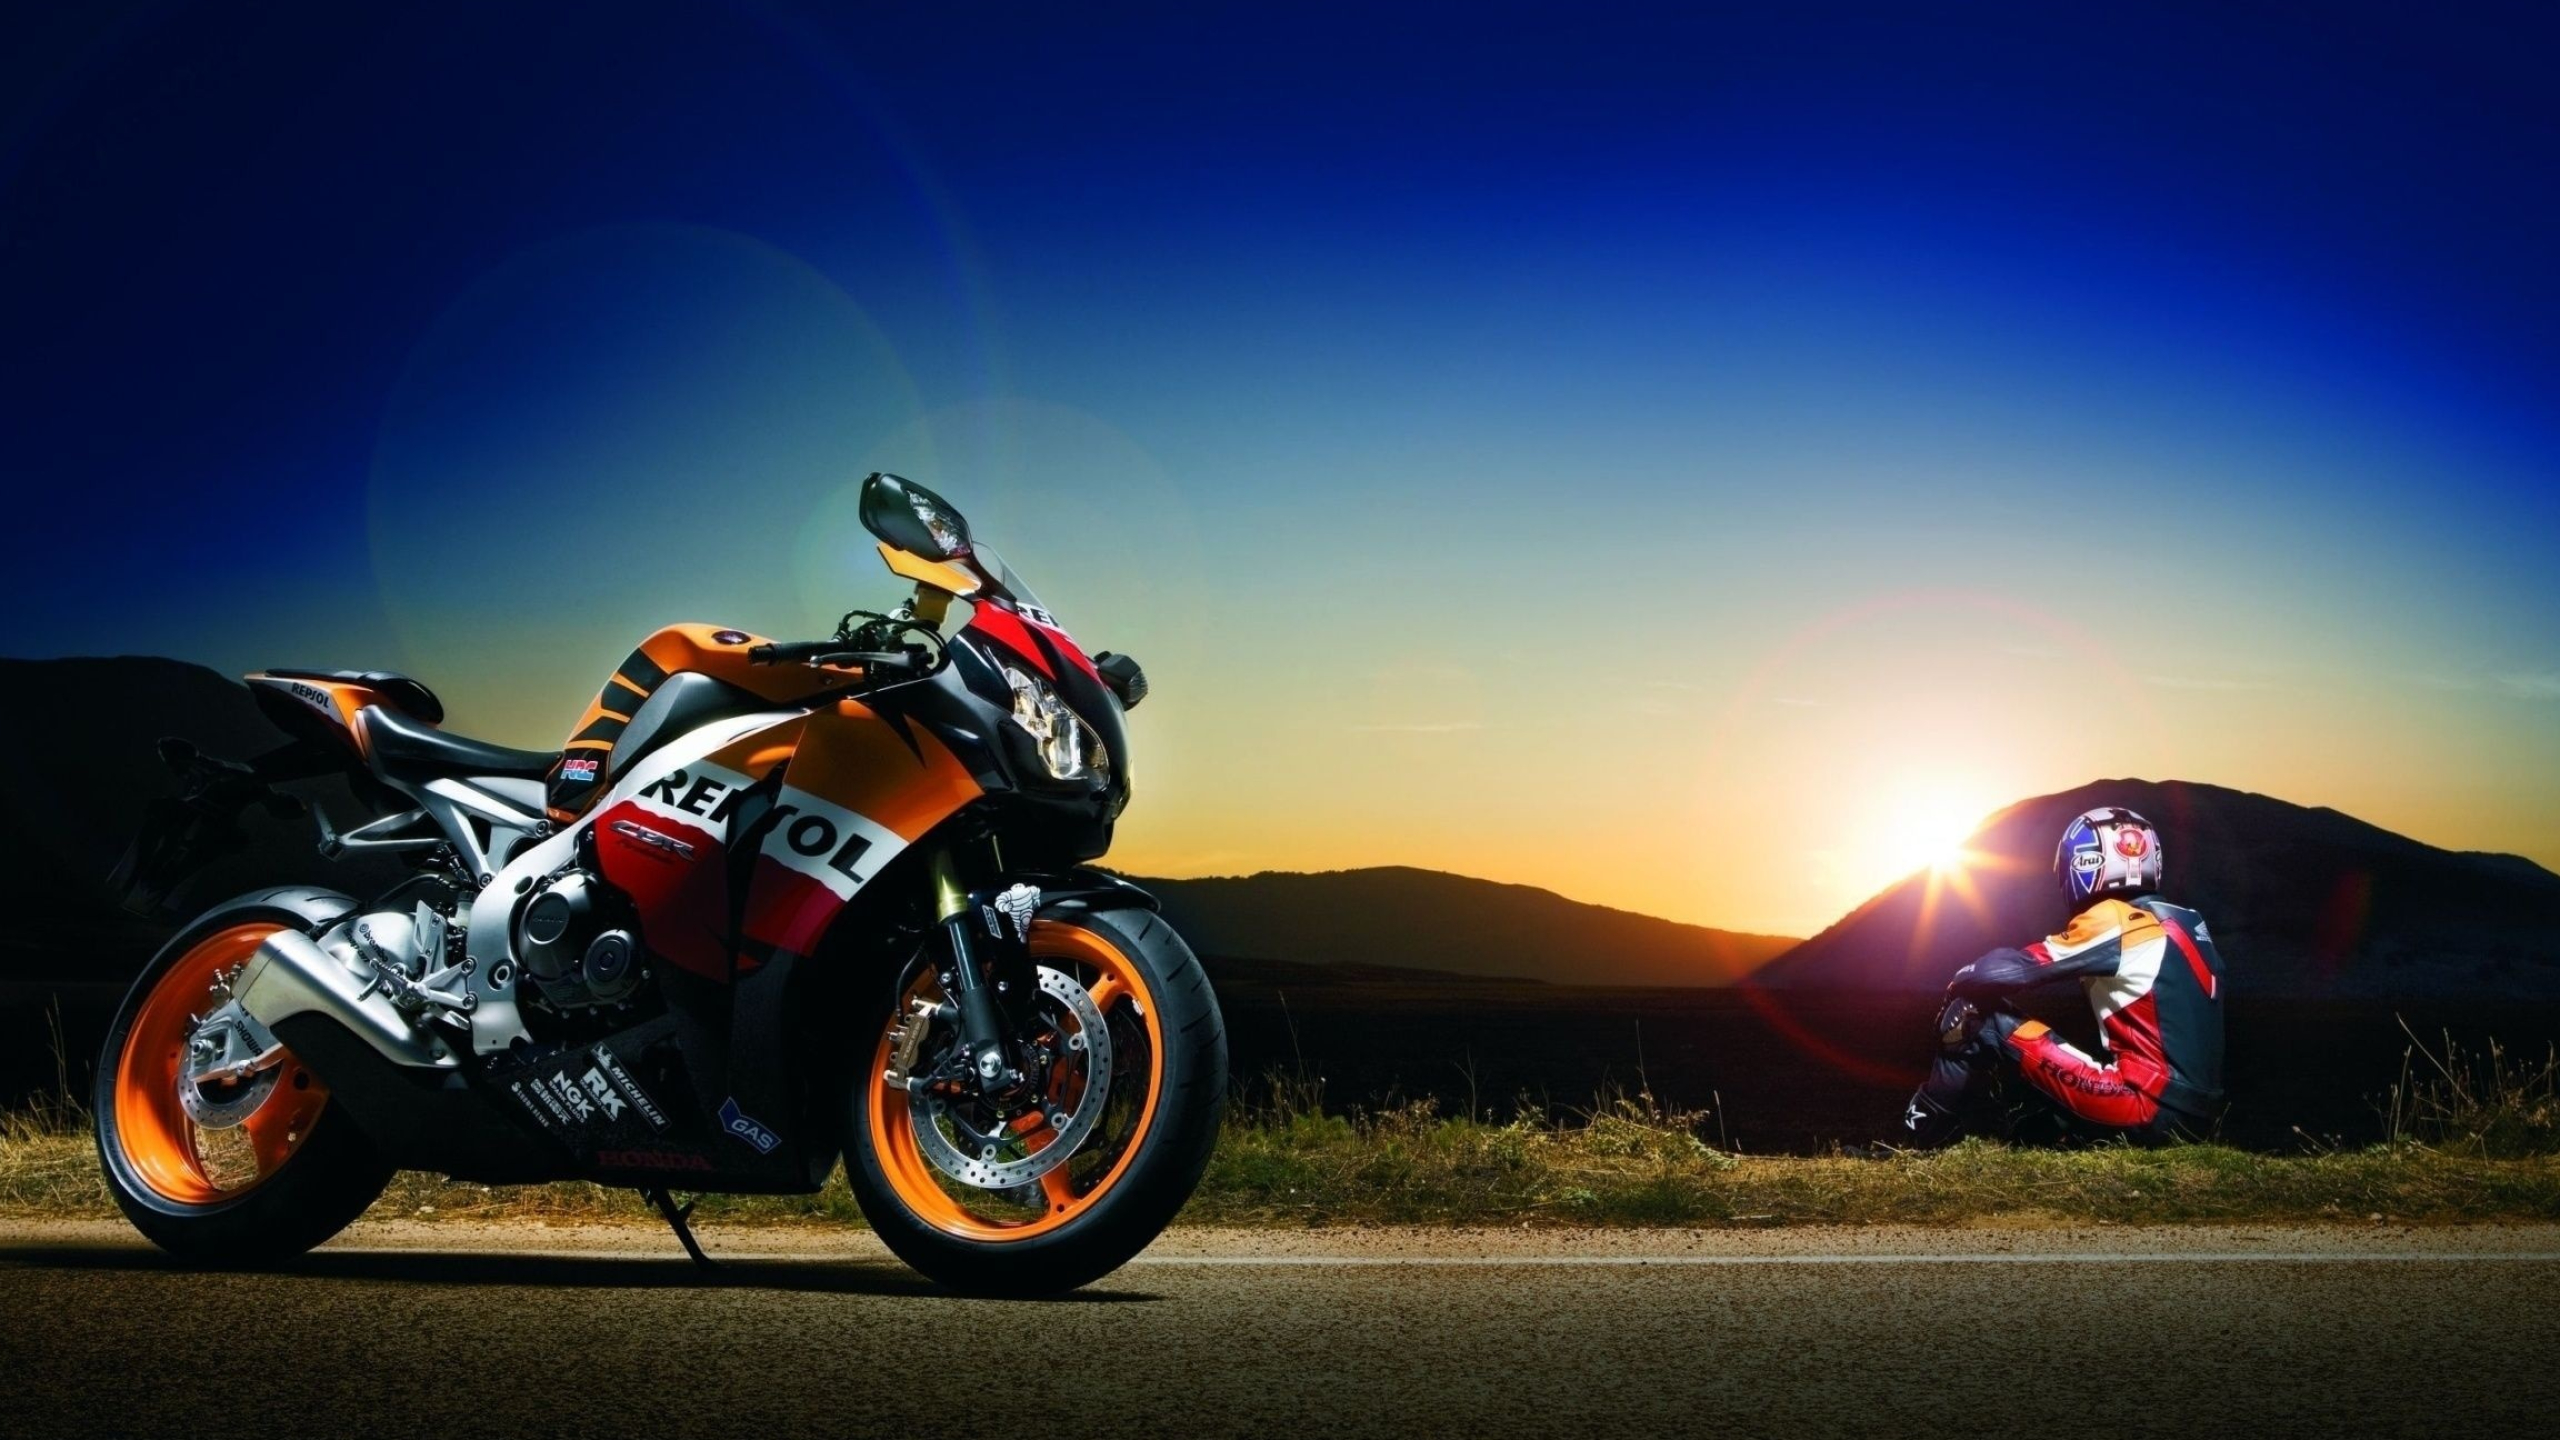 Honda motorcycle, Bike backgrounds, Wallpaper, 2560x1440 HD Desktop